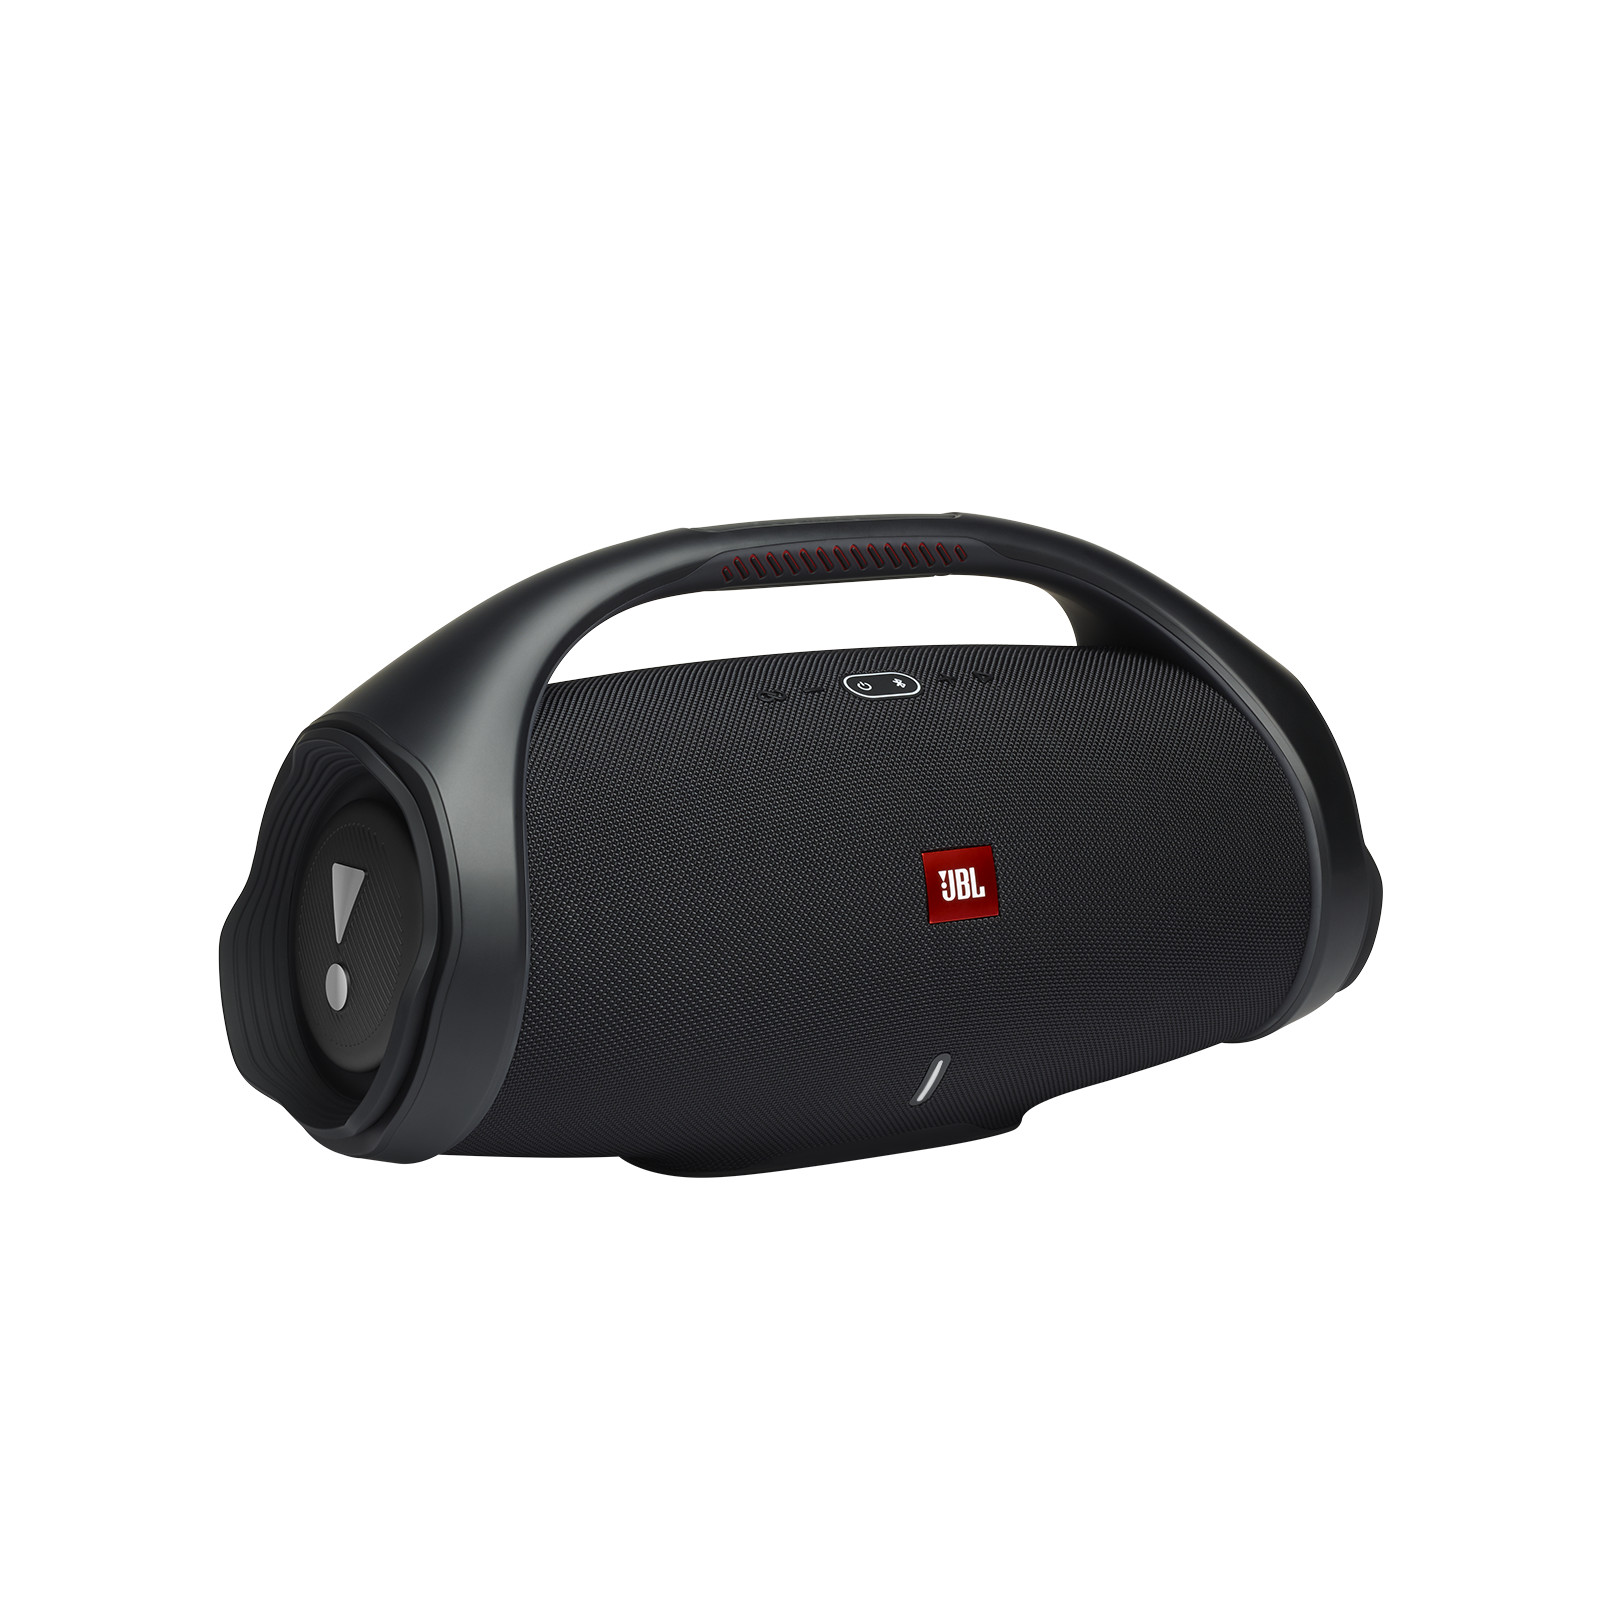 Boombox 2 wireless speaker